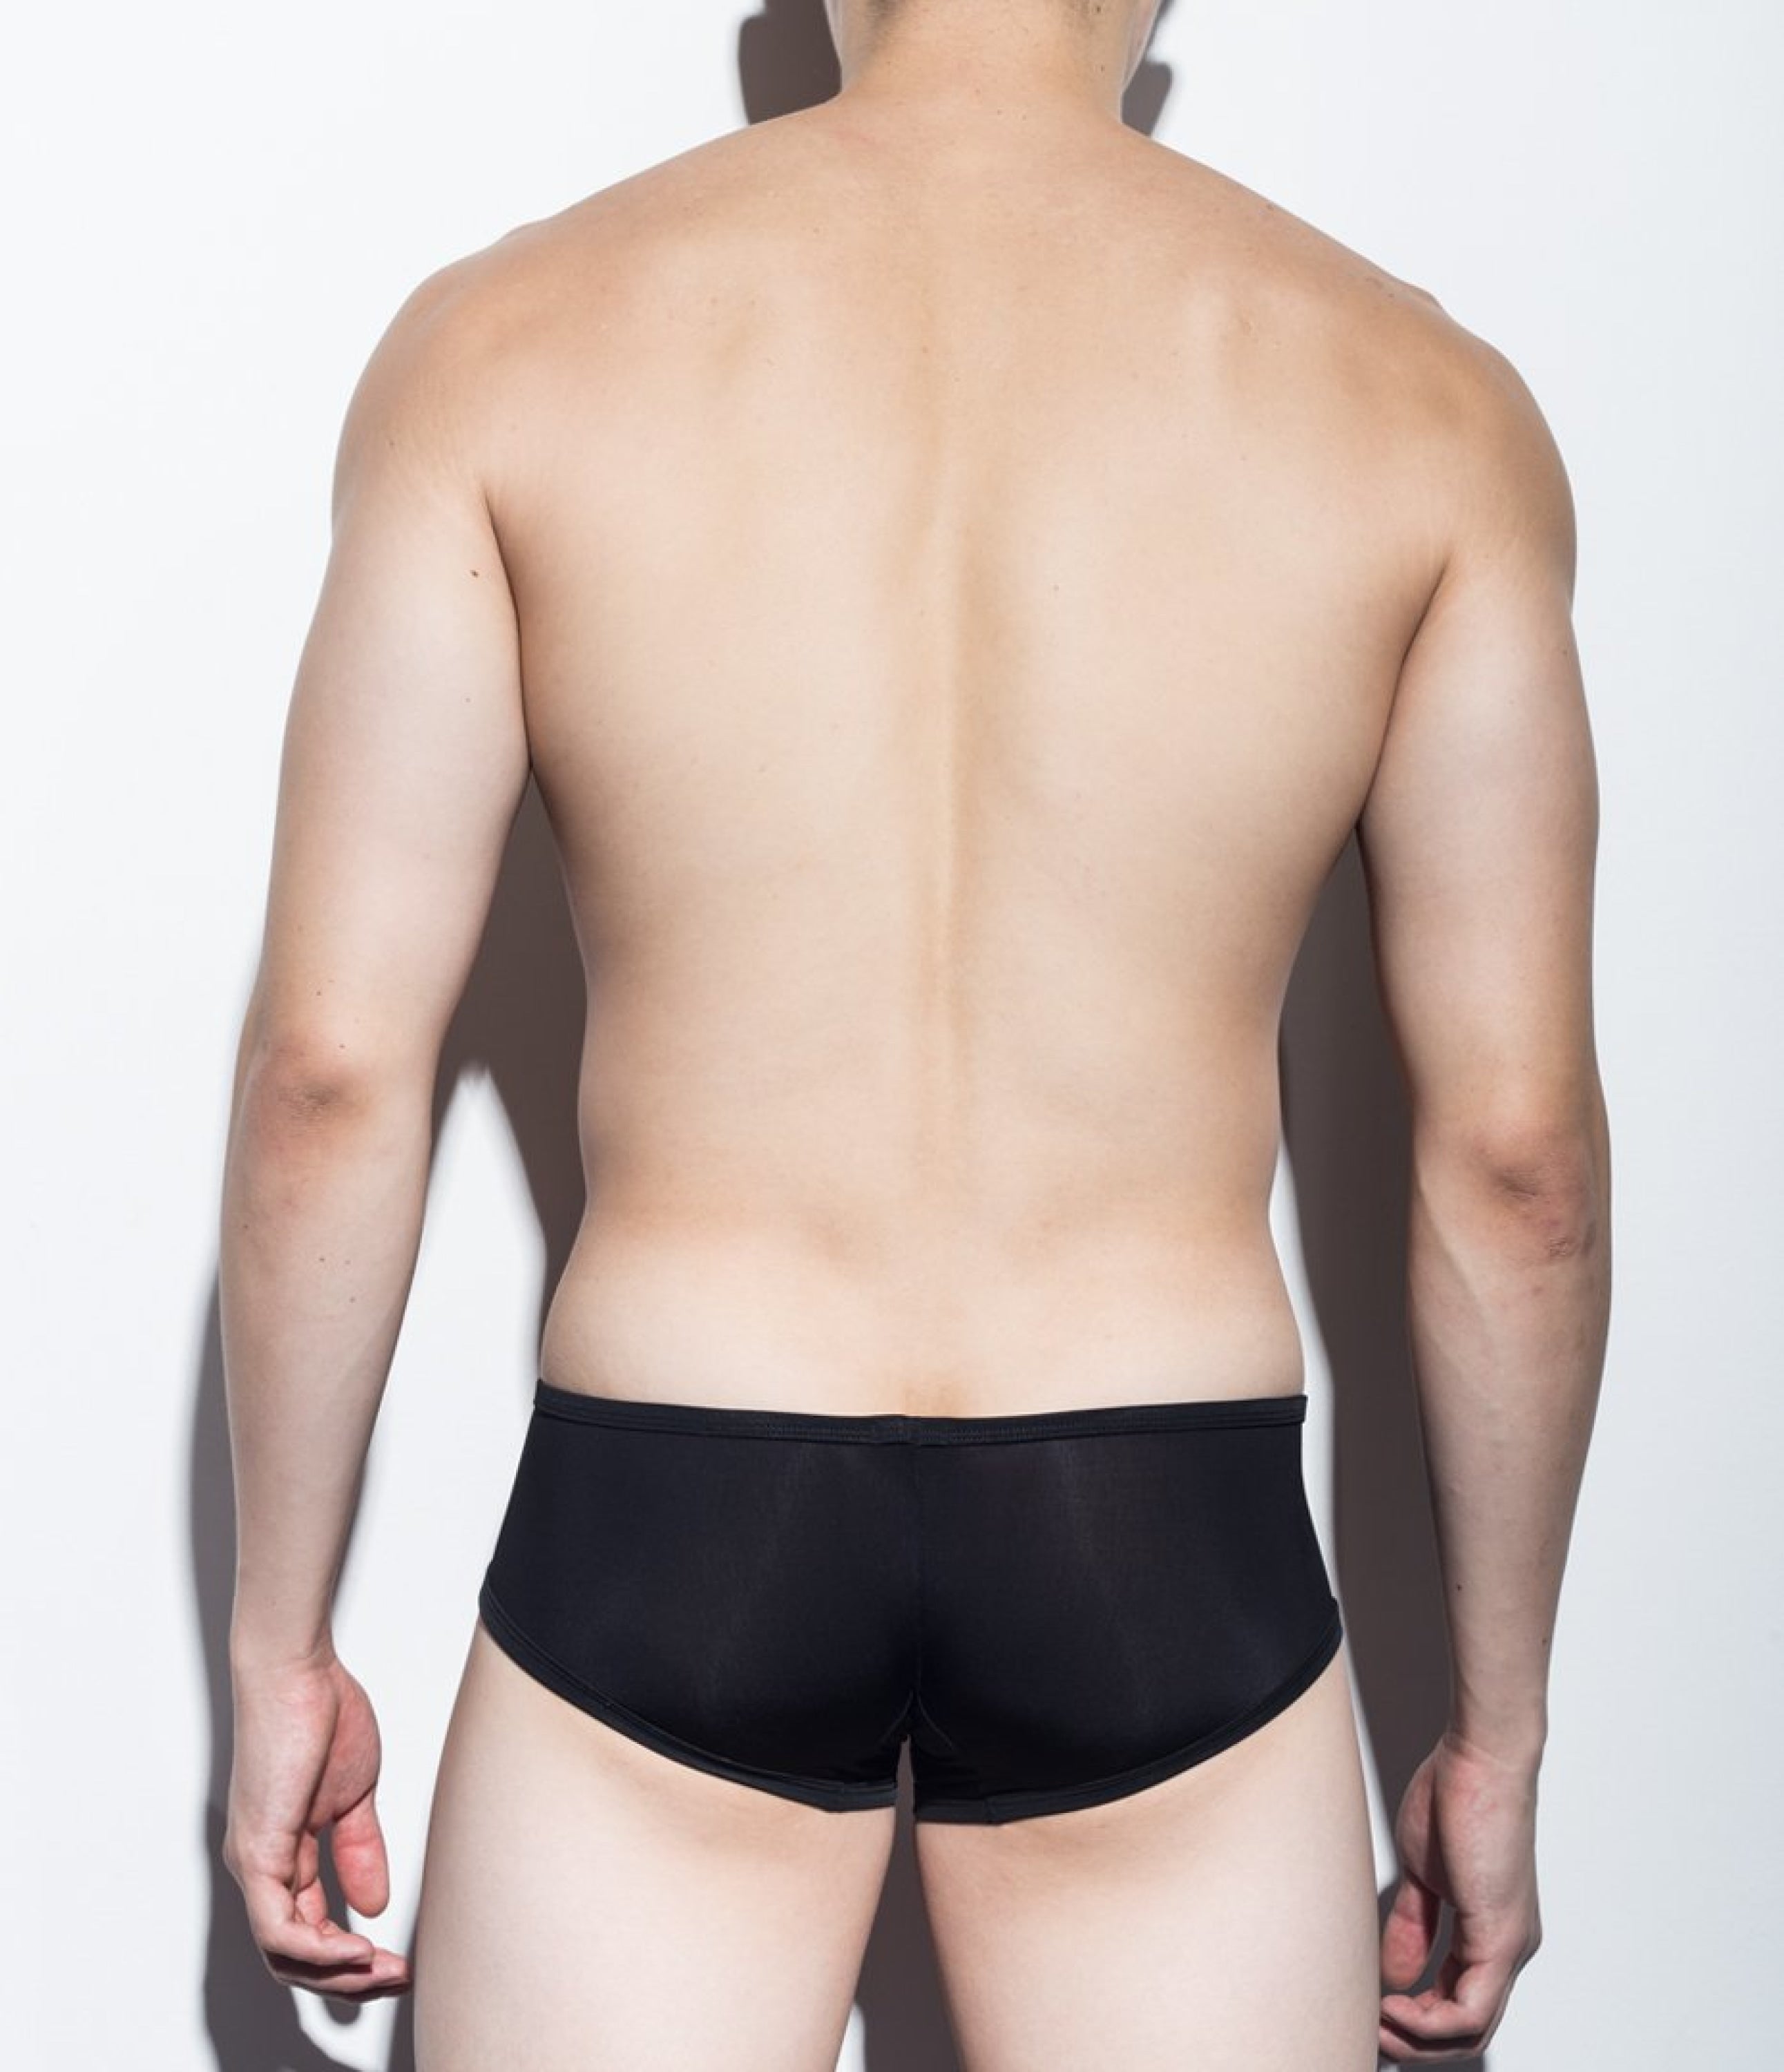 2pc/Pack] Sexy Men's Sportswear Signature Mini Shorts - Ki Nam (Black –  MATEGEAR - Sexy Men's Swimwear, Underwear, Sportswear and Loungewear